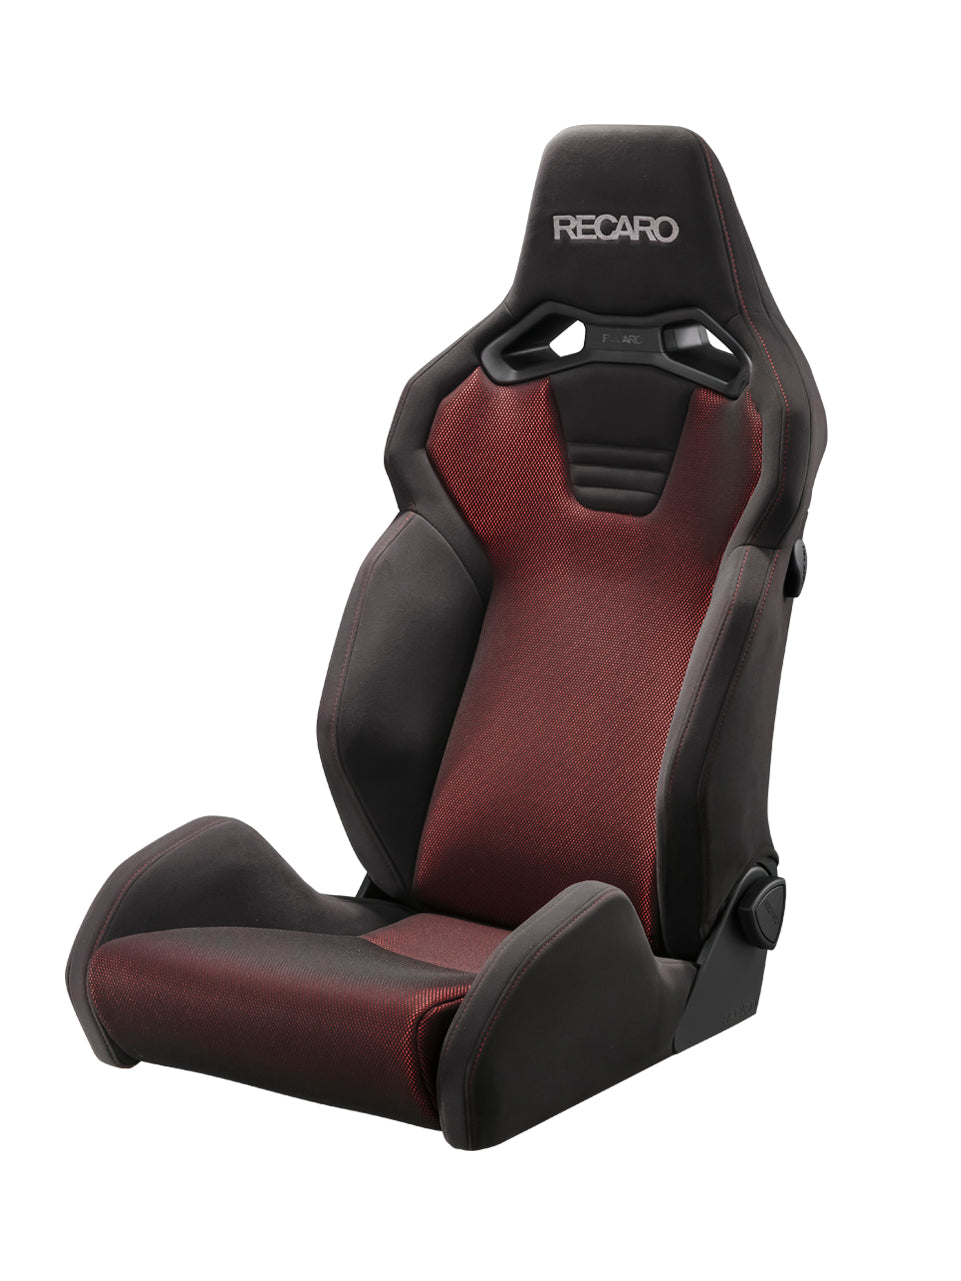 RECARO SR-S BK100 RD BK BRILLIANT MESH RED AND BLACK COLOR SEAT 81-120.20.641-0